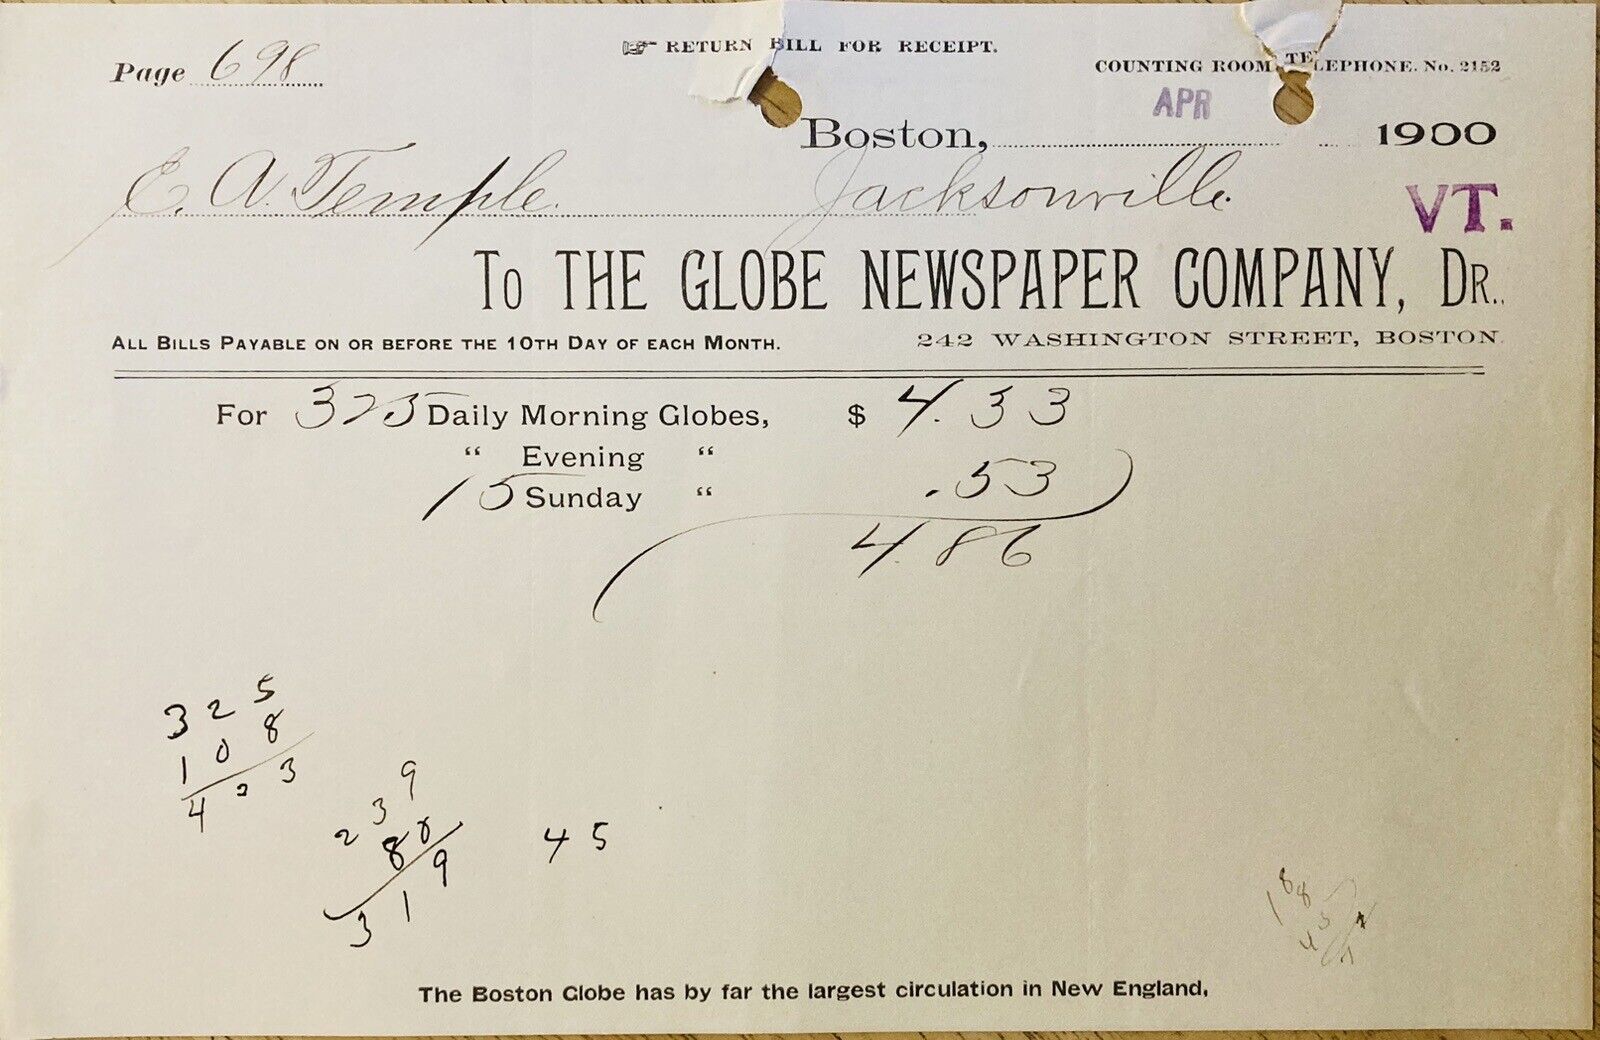 1900 BILLHEAD~THE GLOBE NEWSPAPER CO. WASHINGTON ST. BOSTON. DELIVERY BILL COST